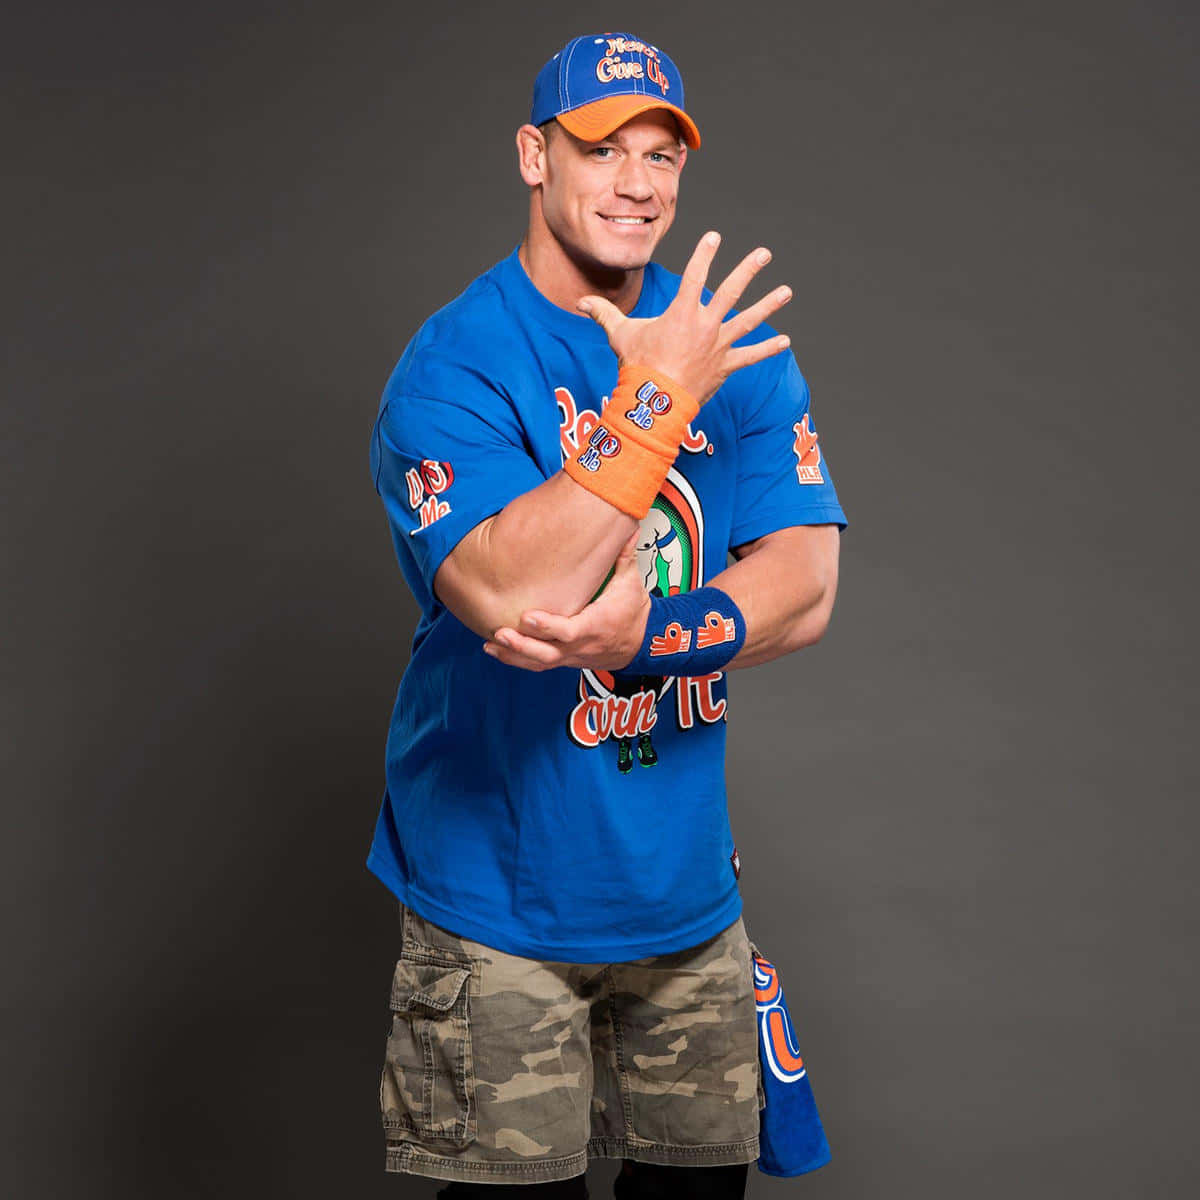 Powerful Stance of WWE Superstar John Cena